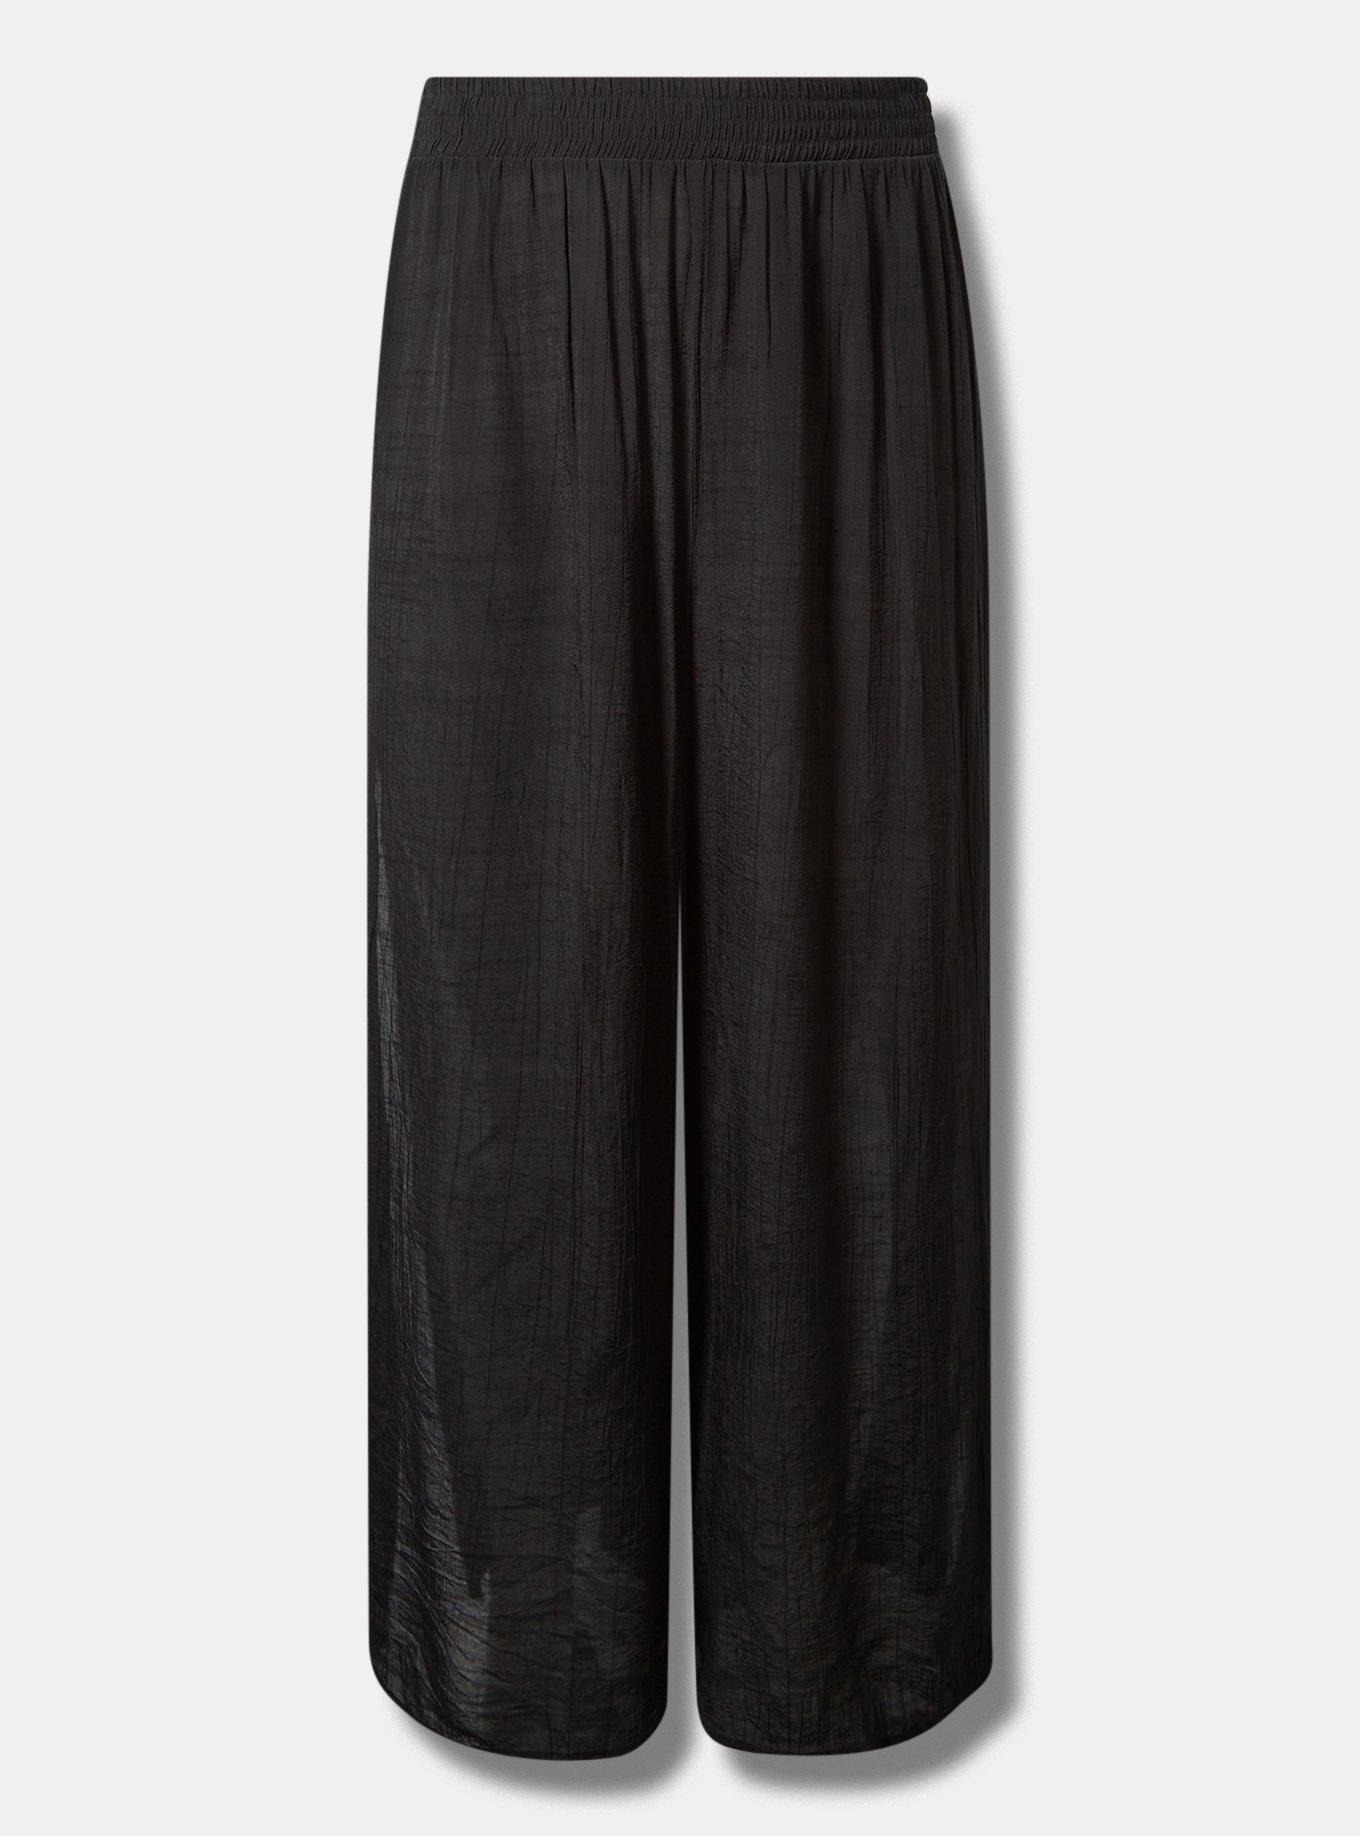 CONVERSE Womens Tracksuit Trousers Joggers UK 18 XL Black Cotton, Vintage  & Second-Hand Clothing Online